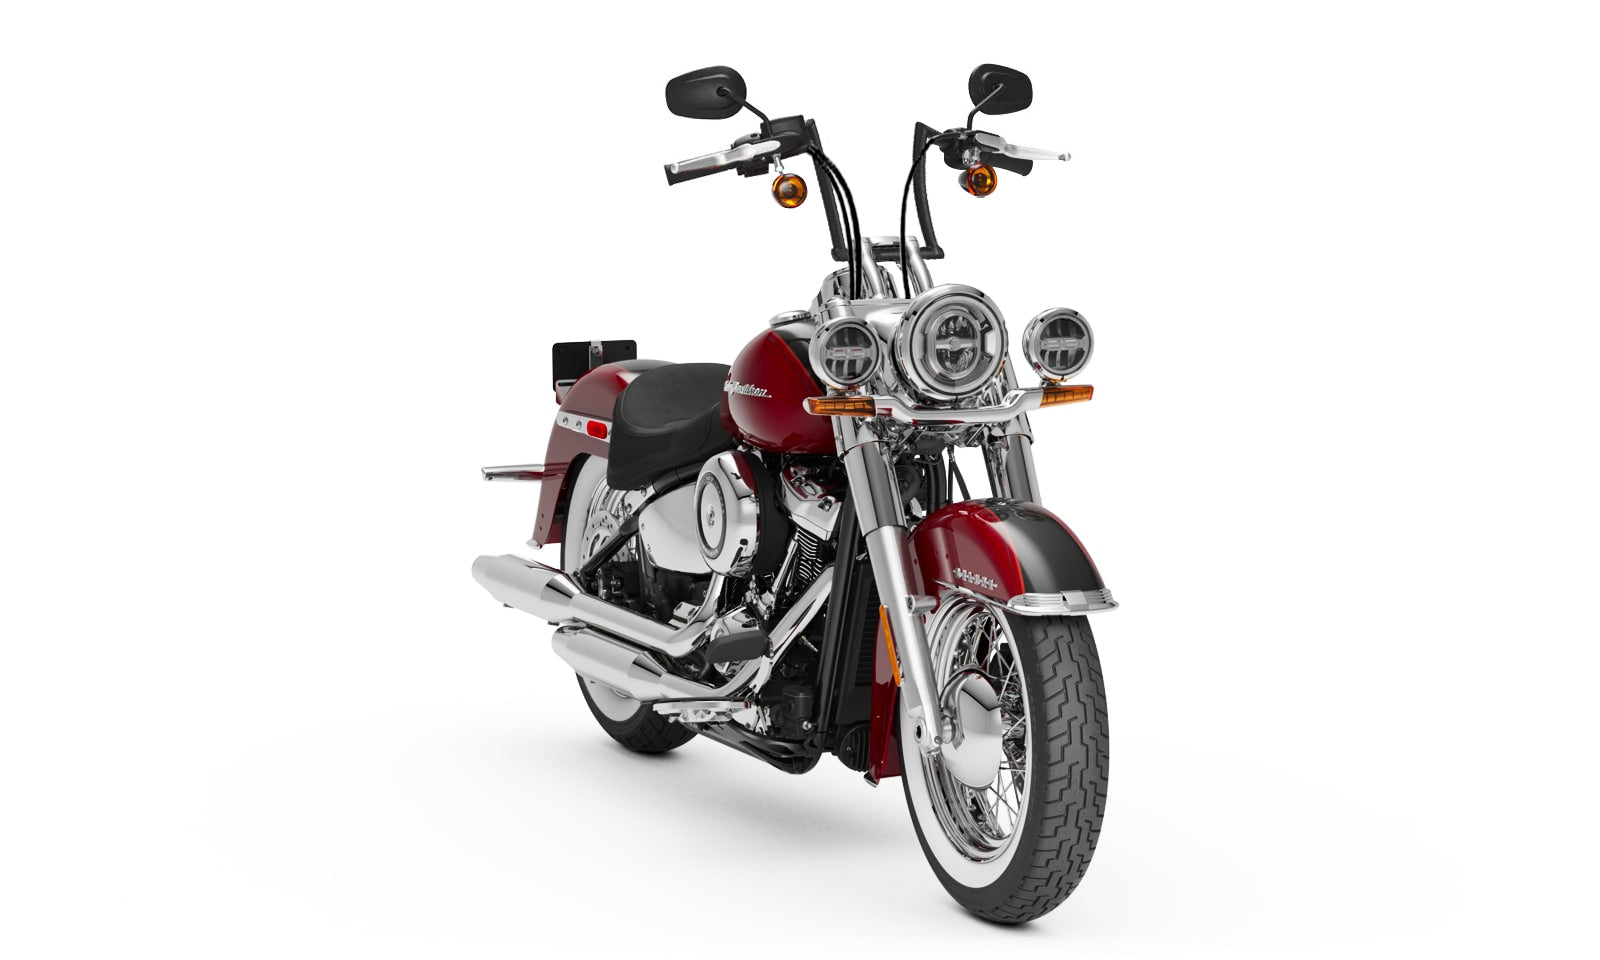 Viking Iron Born 9" Handlebar for Harley Softail Deluxe FLSTN/I Matte Black Bag on Bike View @expand